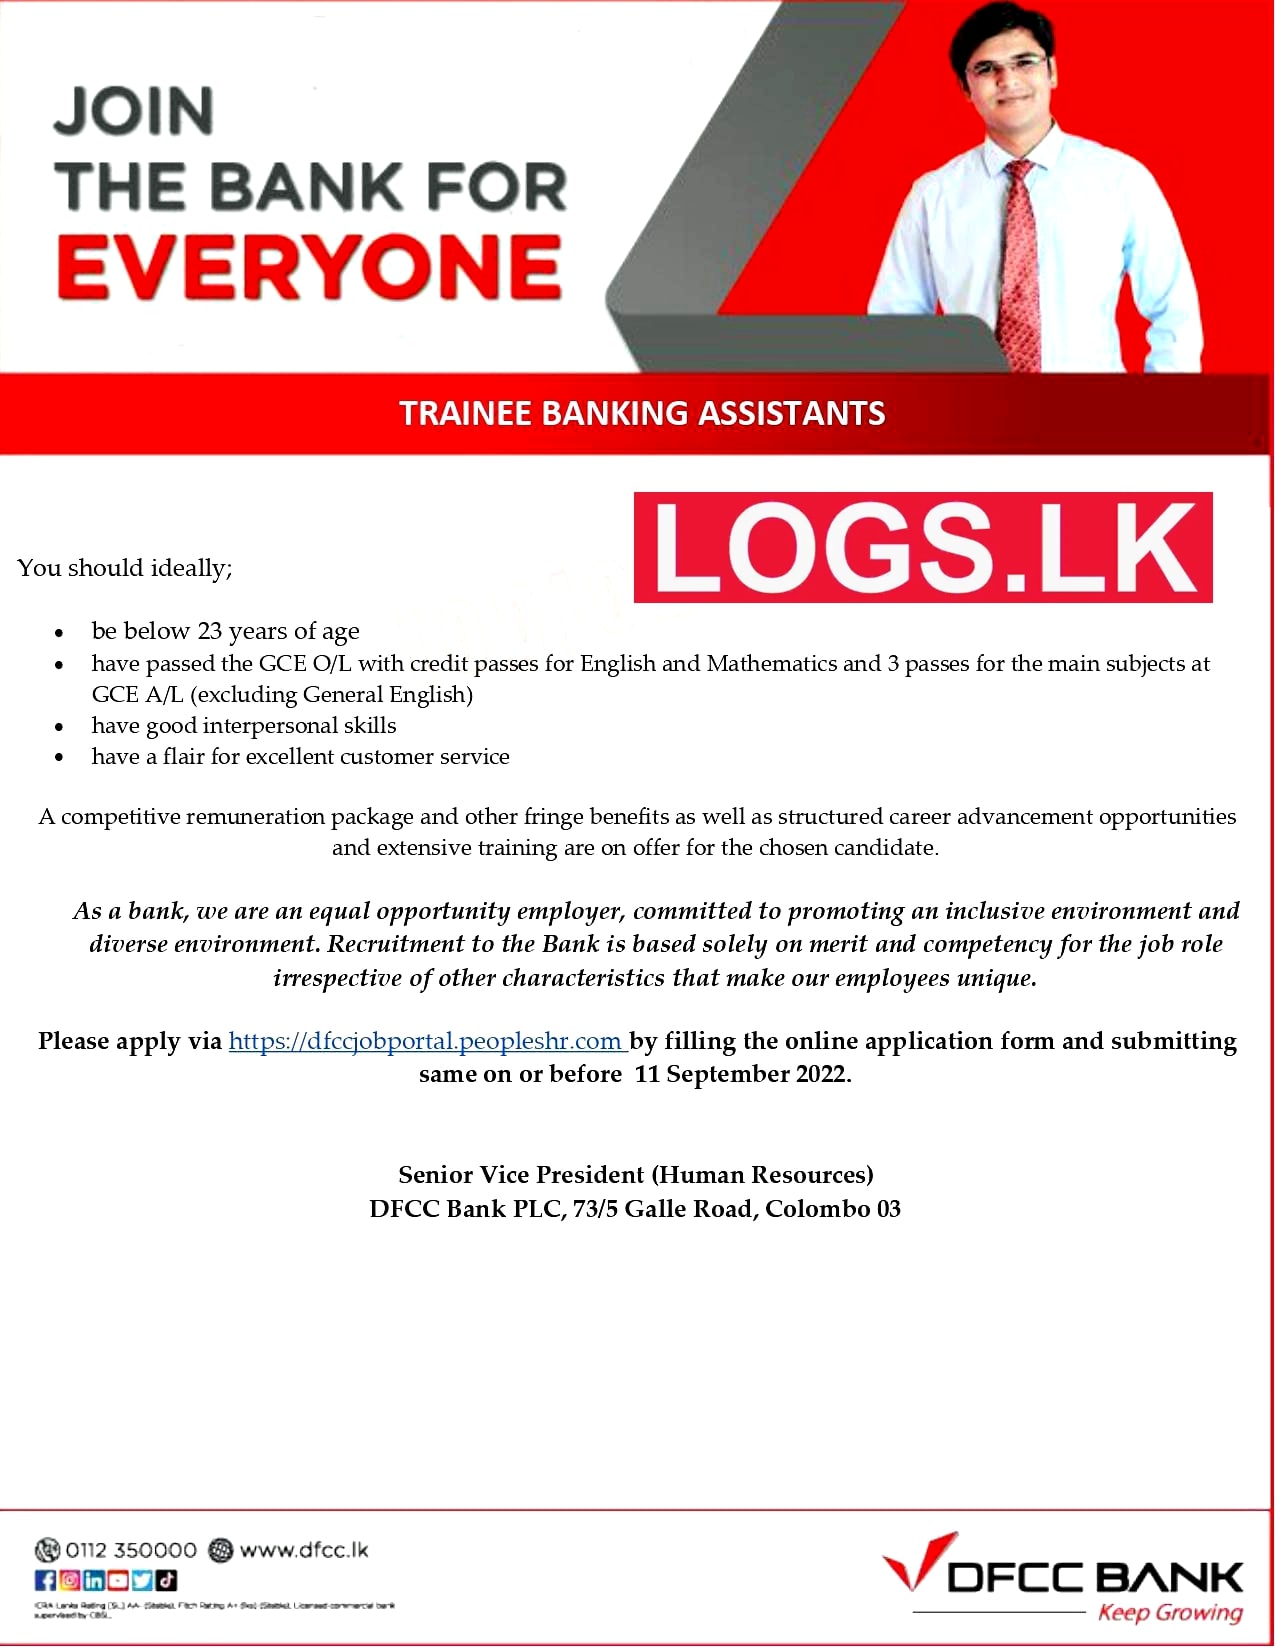 Trainee Banking Assistants Jobs Vacancies 2022 in DFCC Bank Details, Application